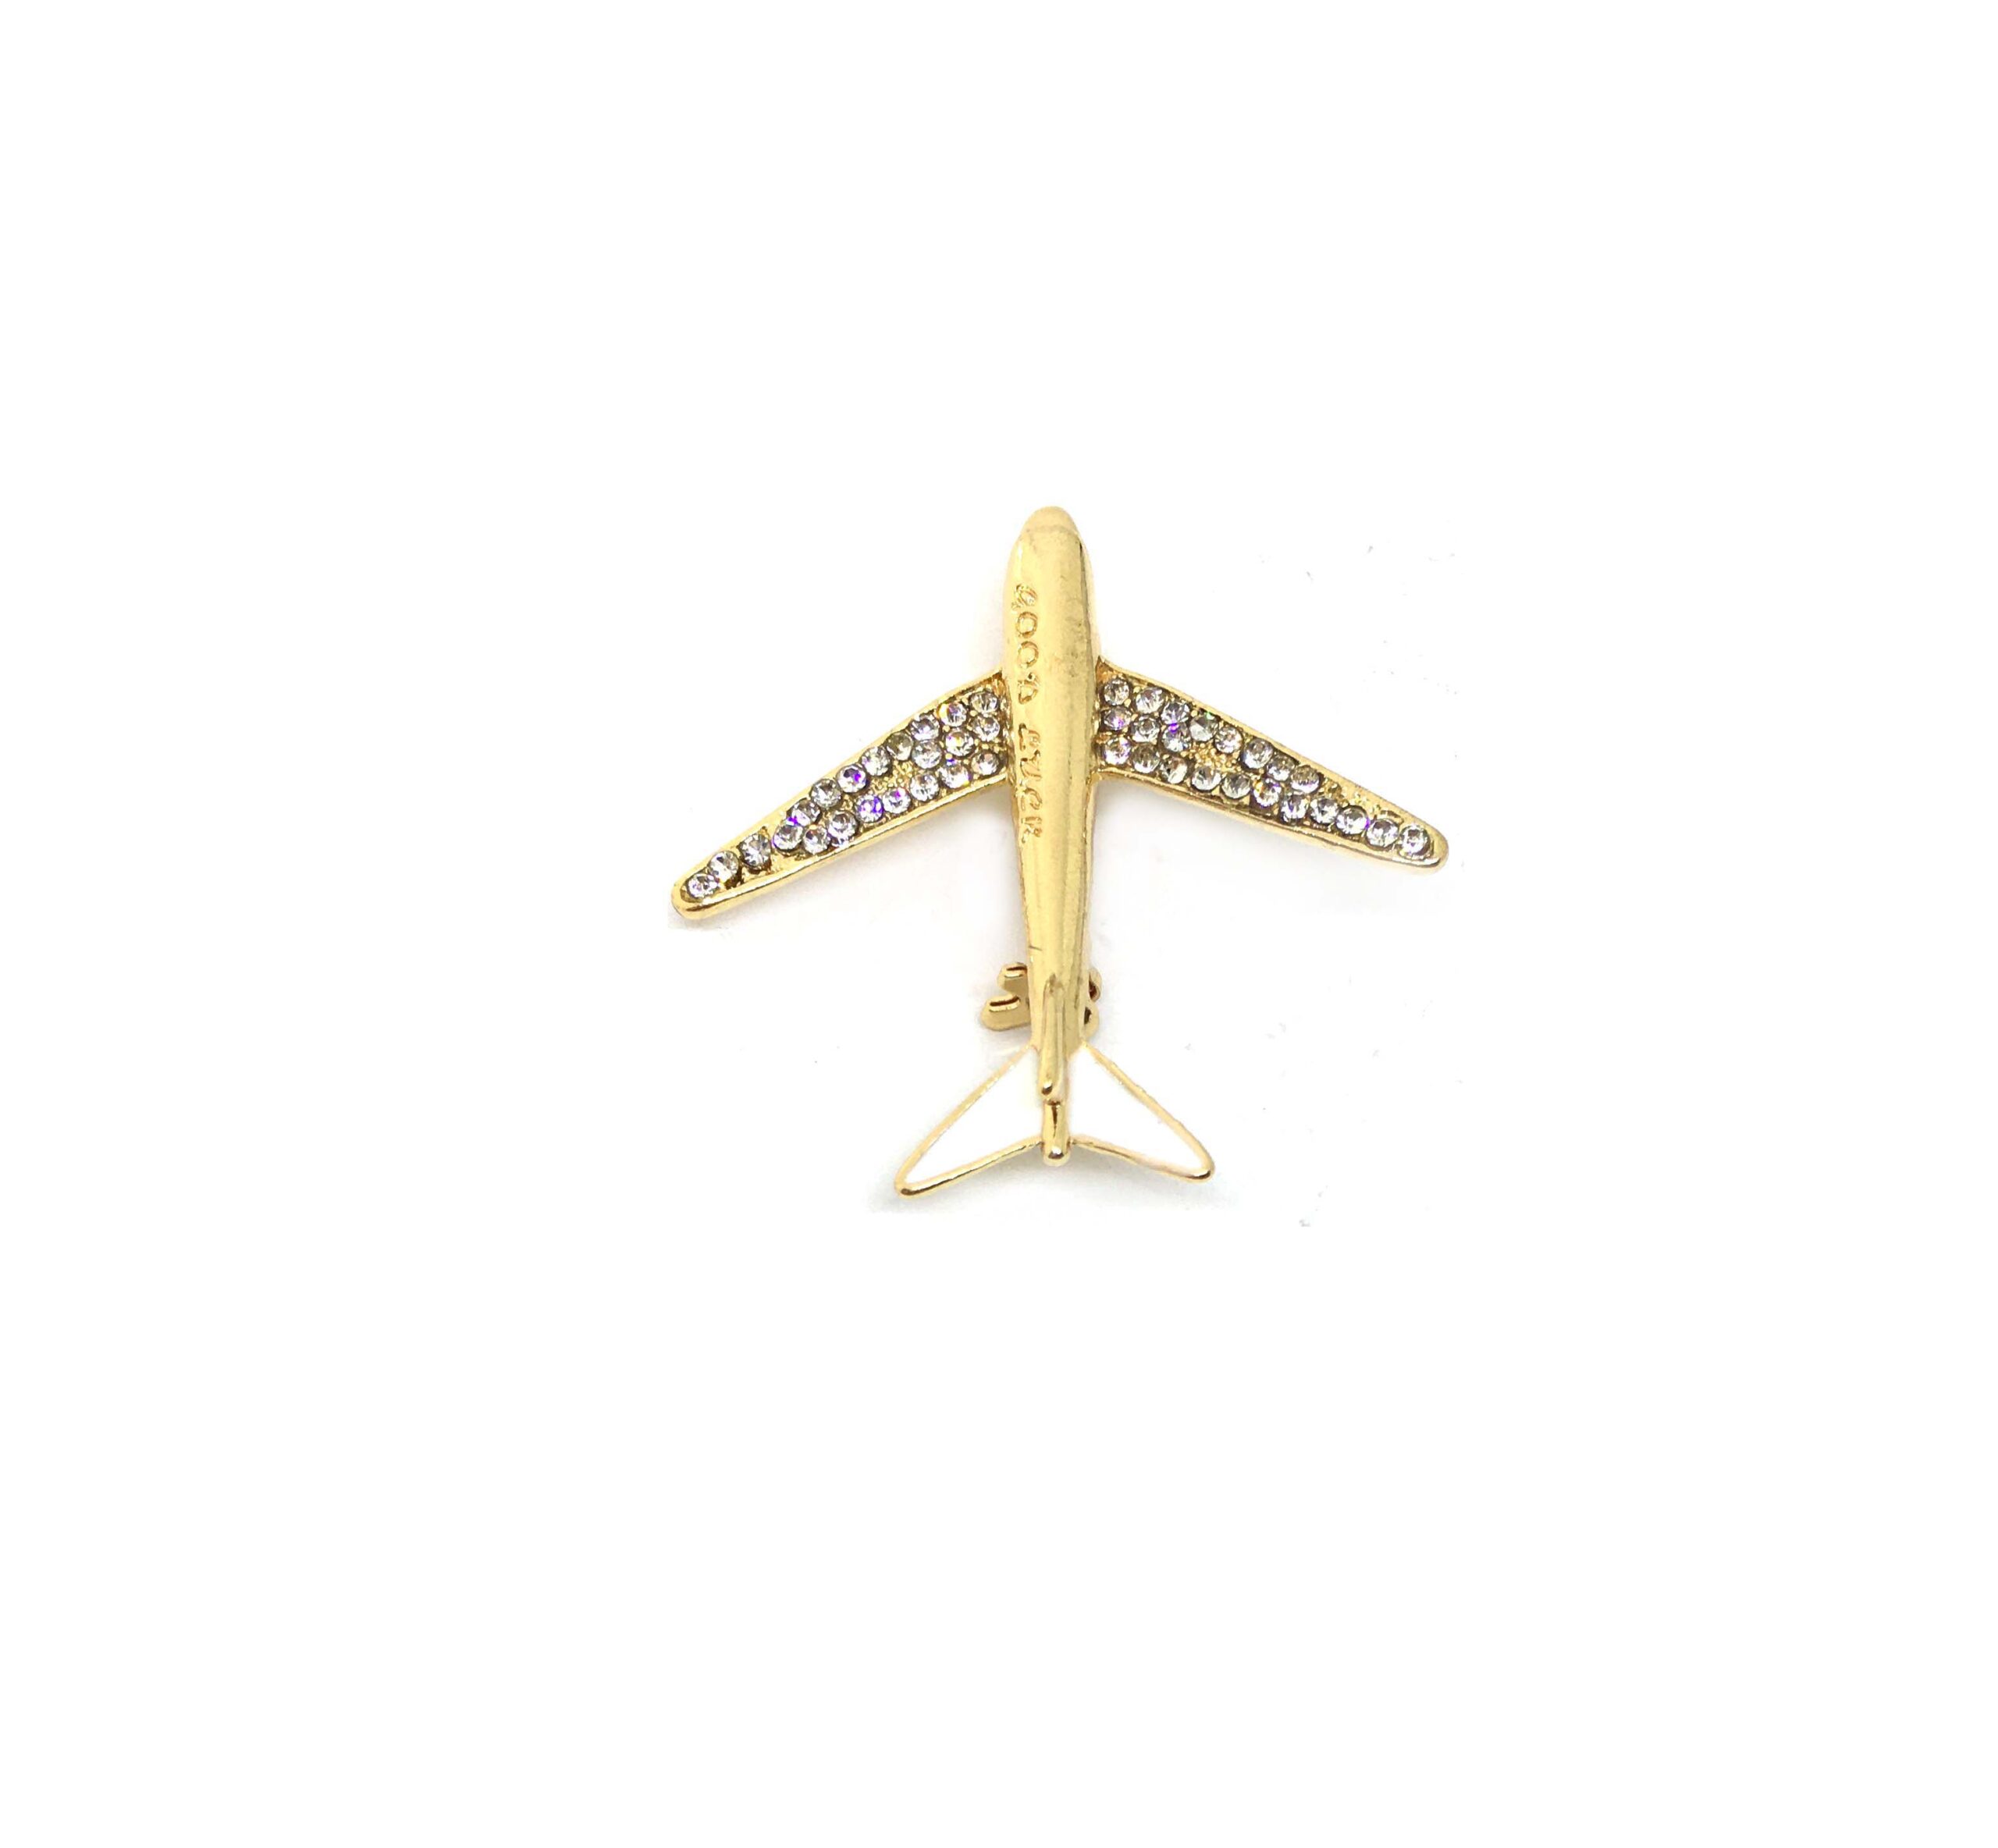 Airplane Brooch Pin